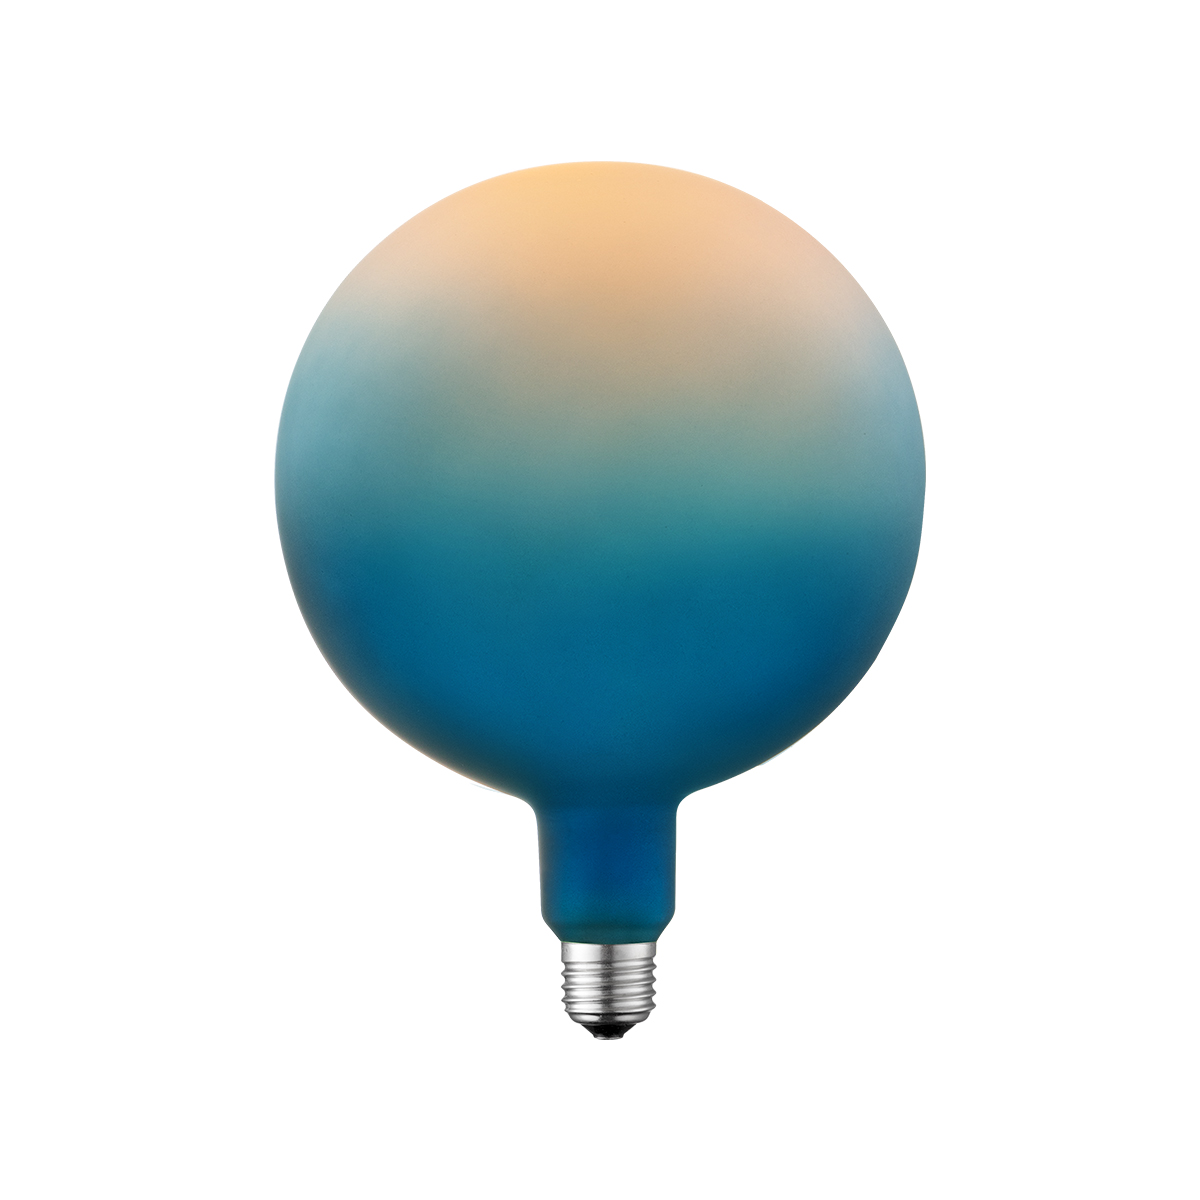 Tangla lighting - TLB-9006-04M - LED Light Bulb Single Spiral filament - G180 4W gradient blue opal - non dimmable - E27